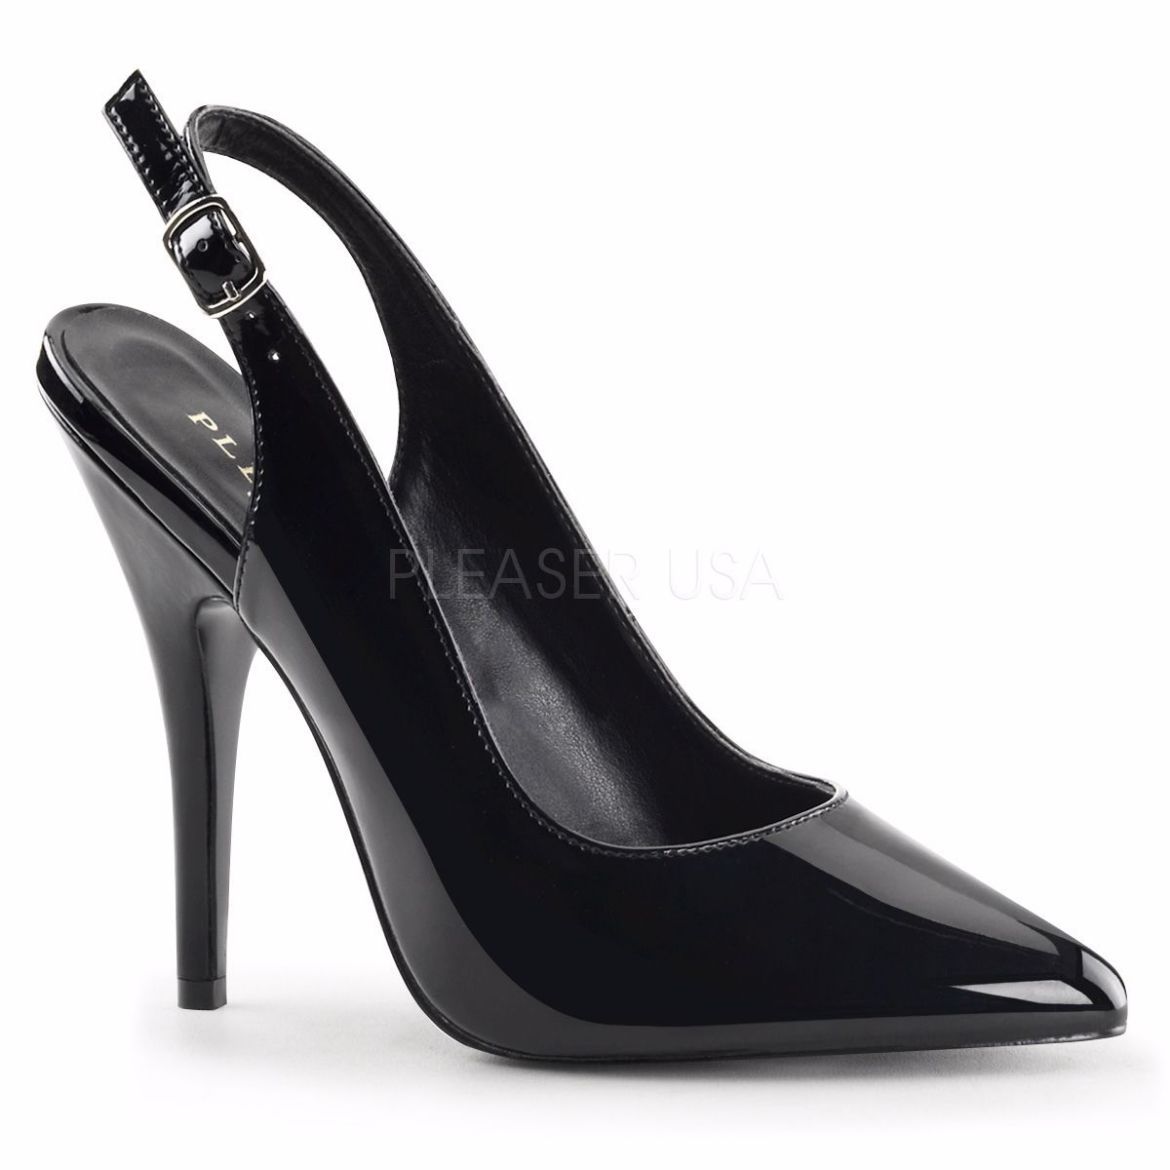 Product image of Pleaser Seduce-317 Black Patent, 5 inch (12.7 cm) Heel Court Pump Shoes